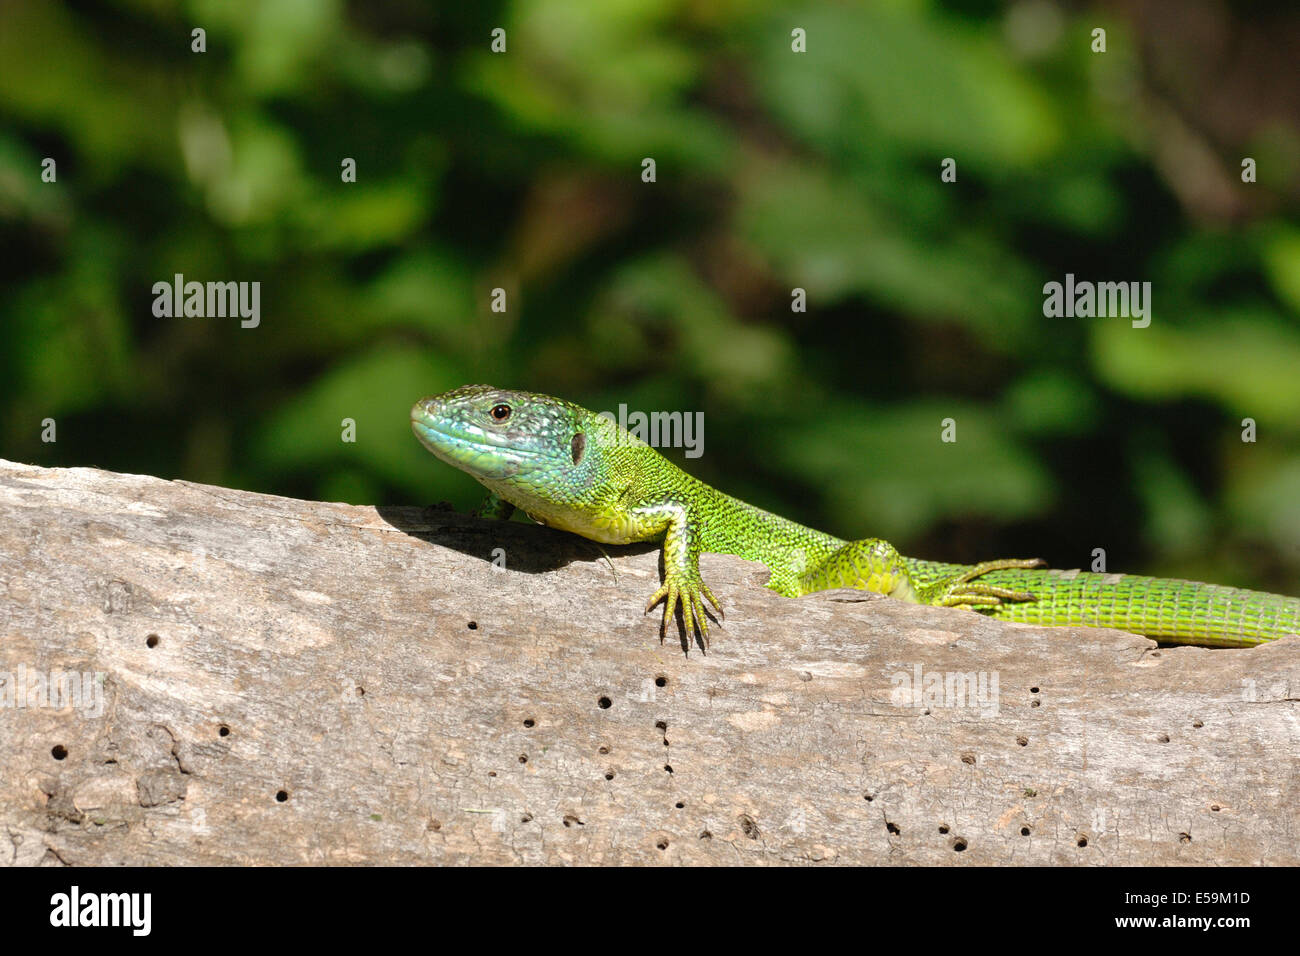 Lacerta viridis, European green lizard on a rock, portrait Stock Photo